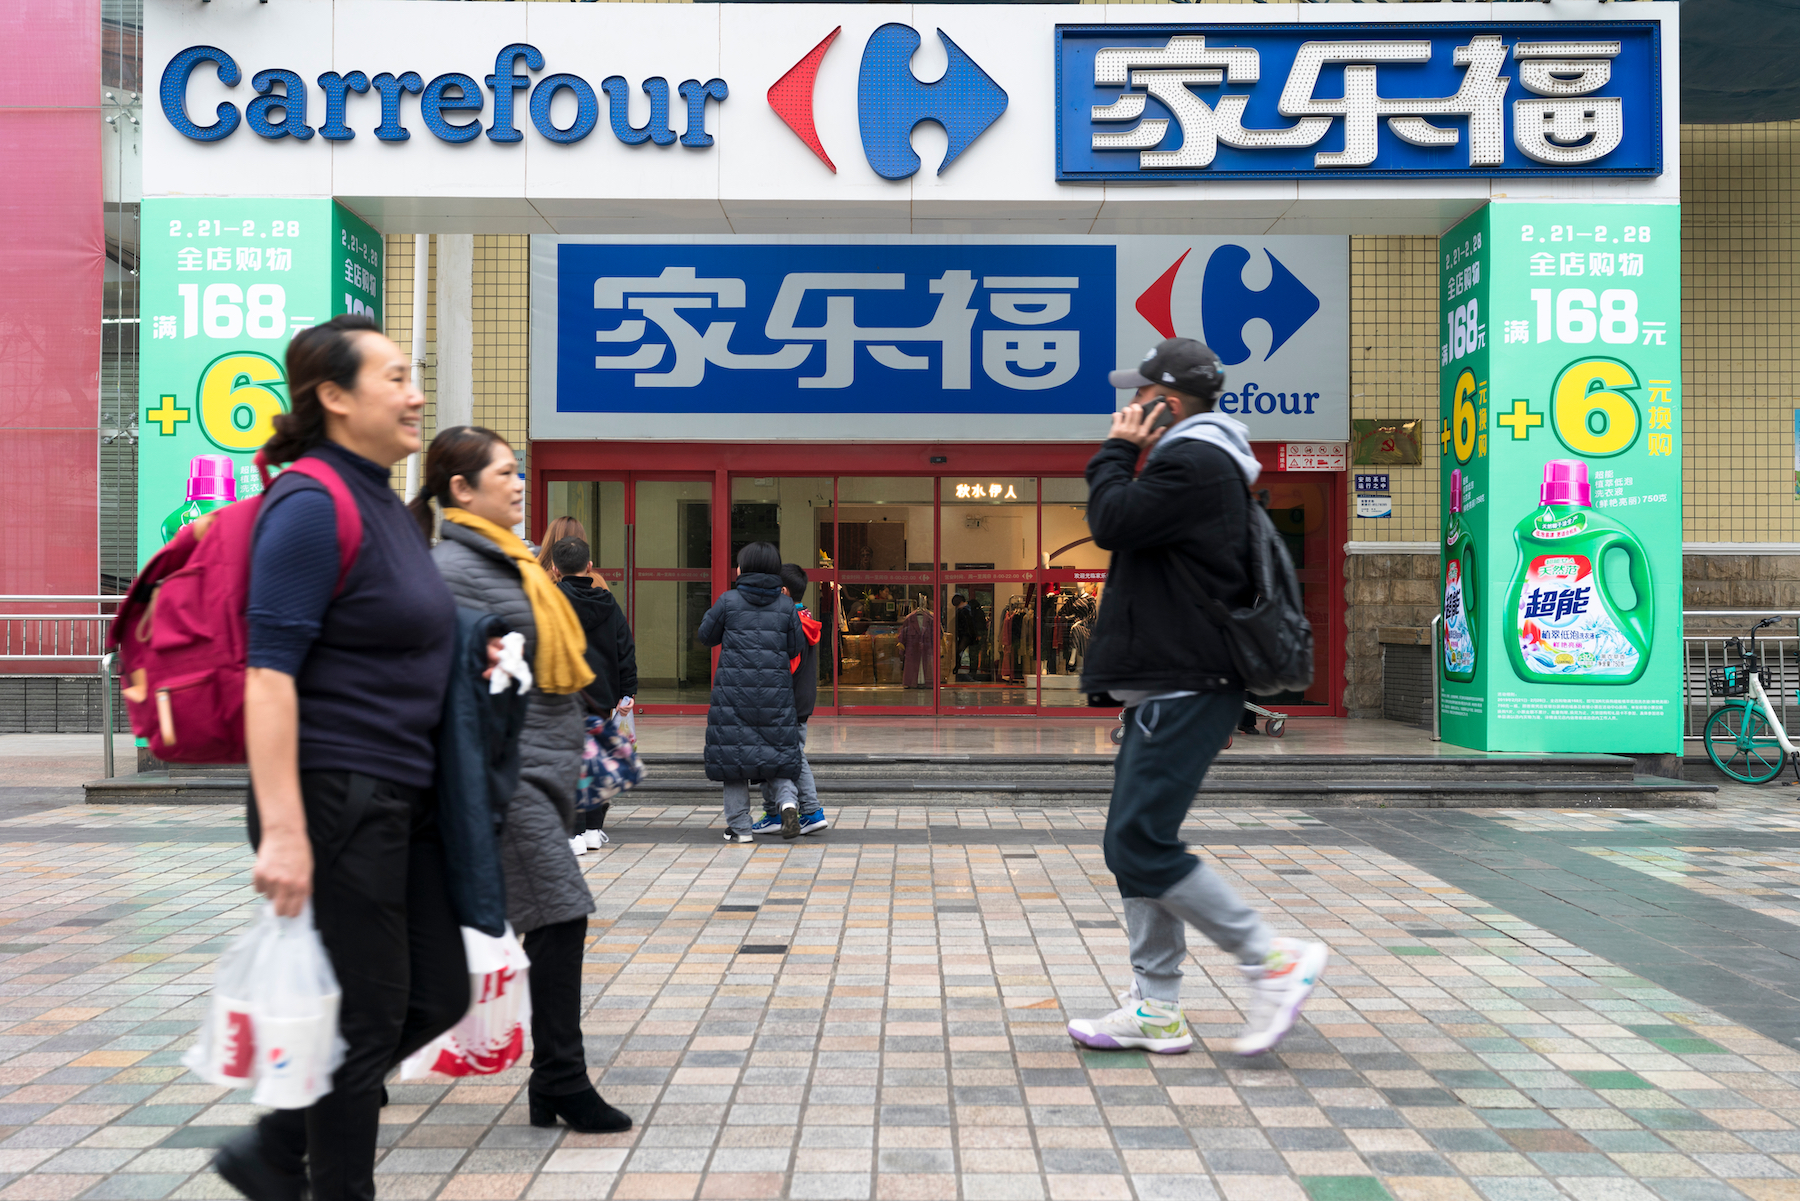 Pedestrians walk past a Carrefour China store